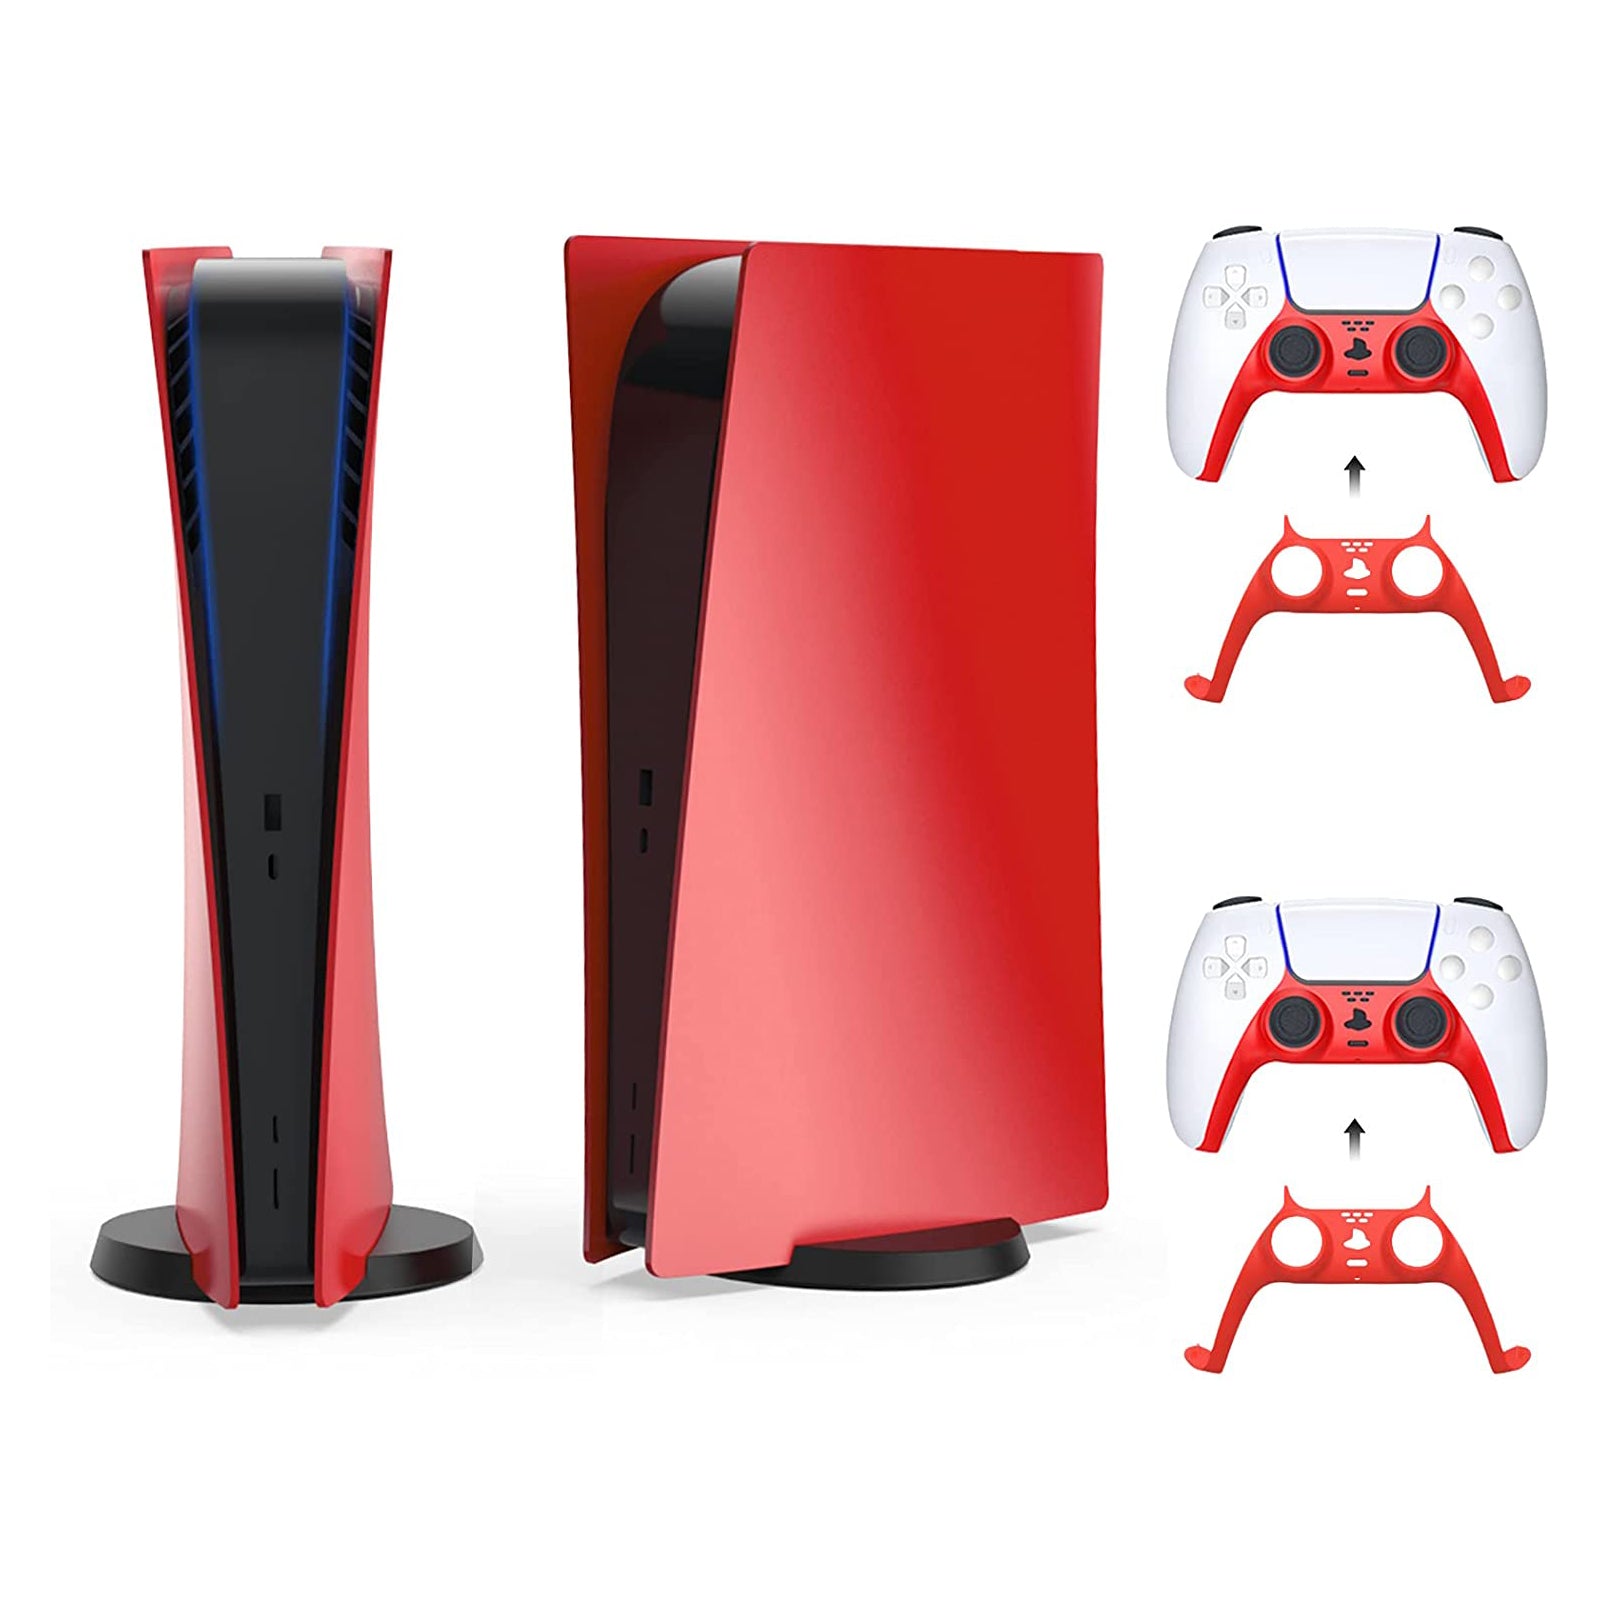 NexiGo PS5 Digital Edition Skin & Controller Skin (Red)